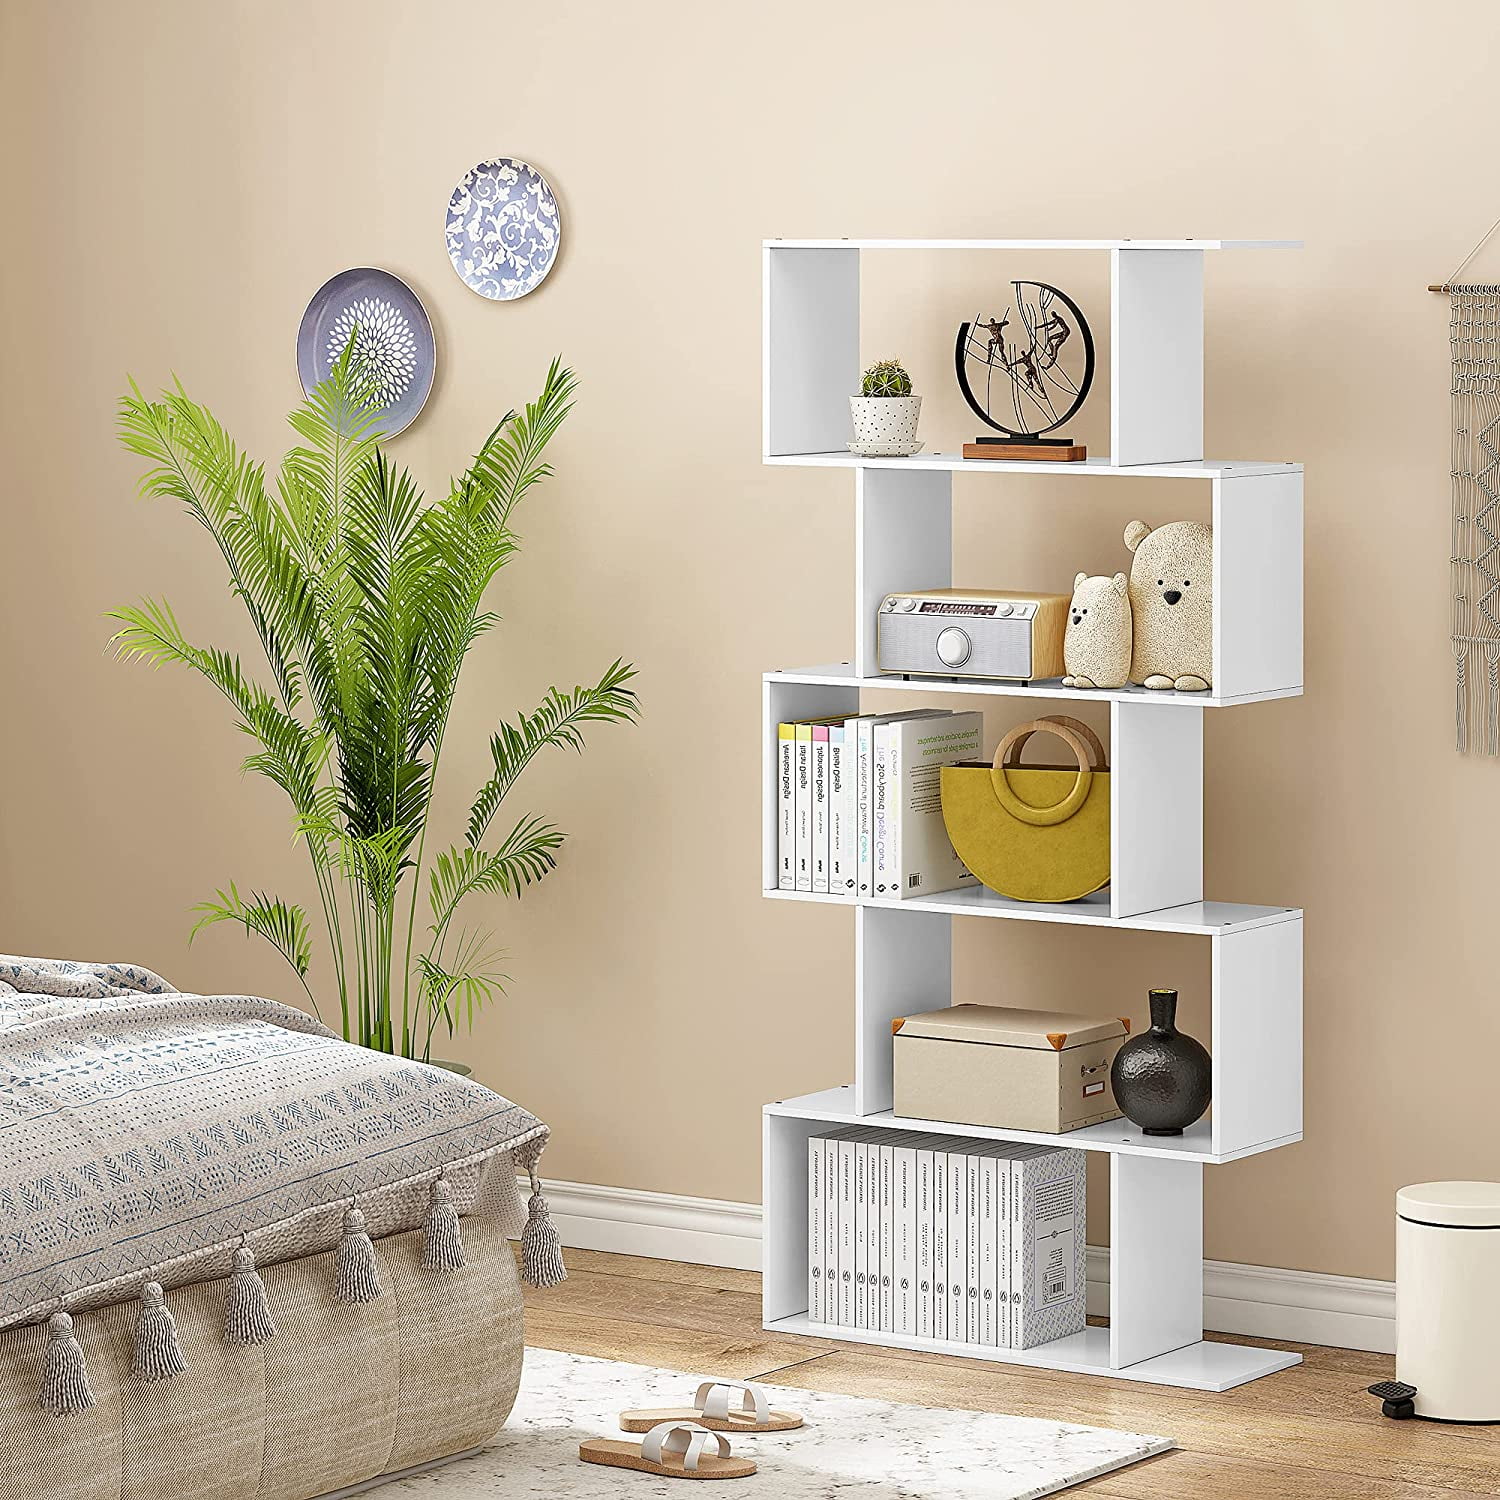 Modern Bookcase, 5-Shelf Storage Organizer Bookshelf with 14-Cube Display  Book Shelf for Home Office, Living Room - Bed Bath & Beyond - 37702223